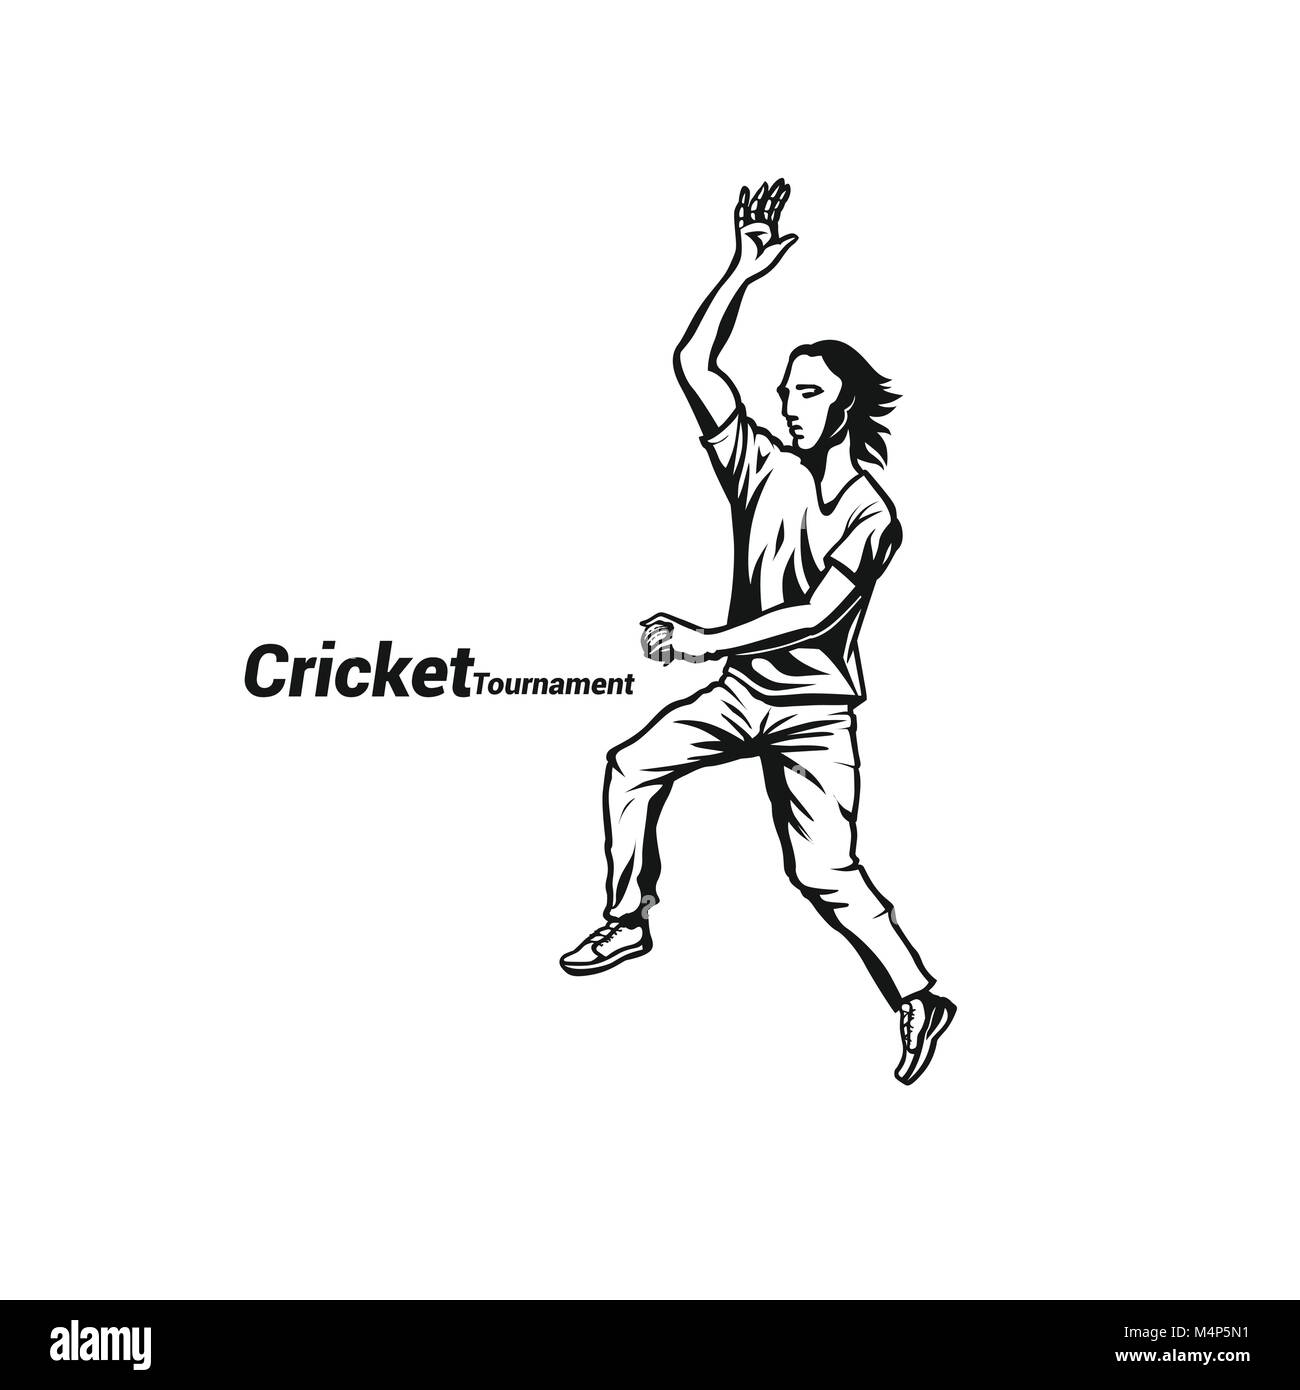 Cricketer bowling a ball vector illustration. Stock Vector